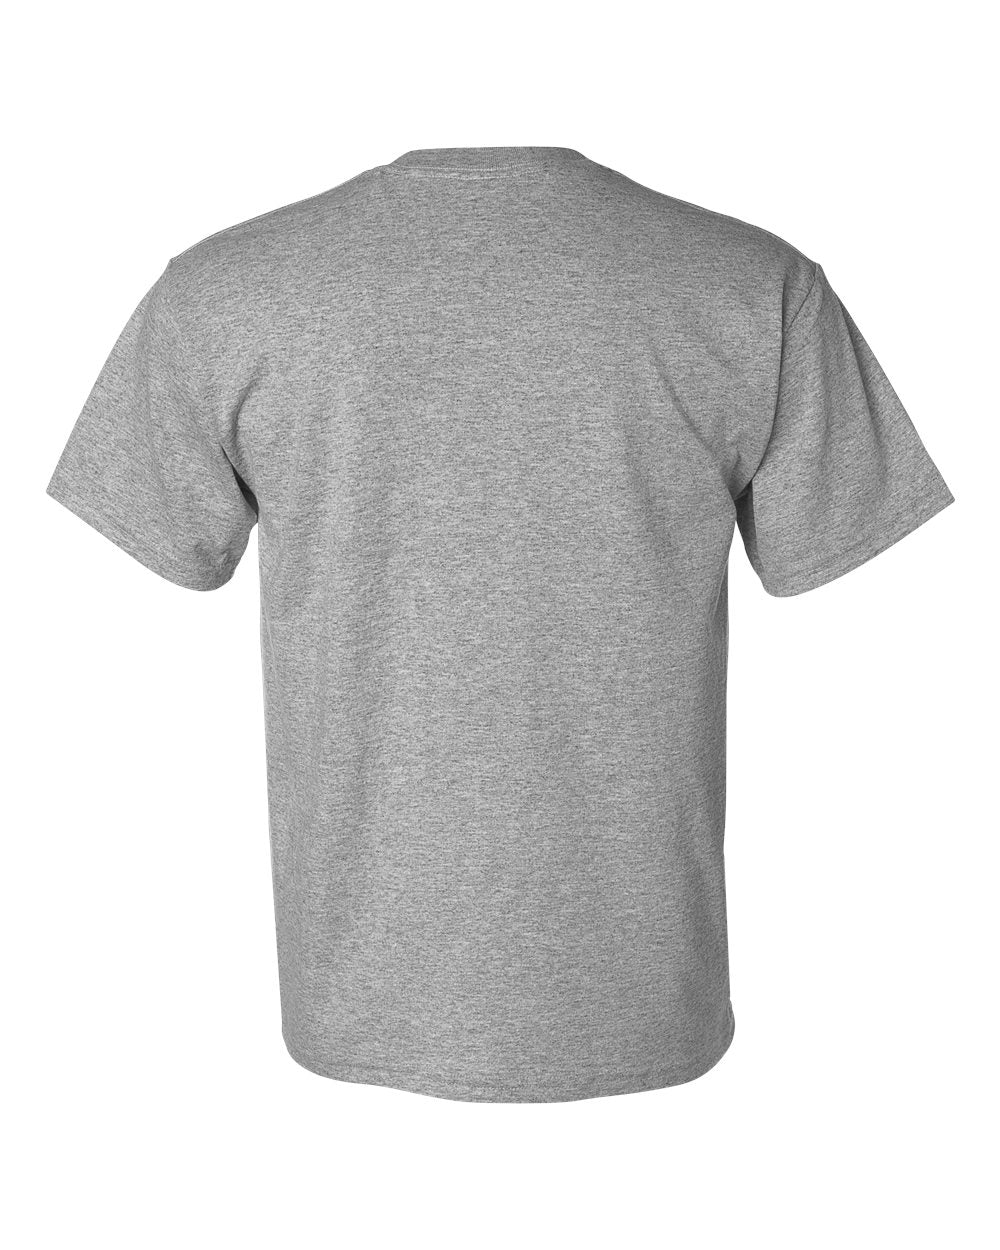 Adult Full Armour 50-50 Blend Grey Unisex Short Sleeve Shirt.